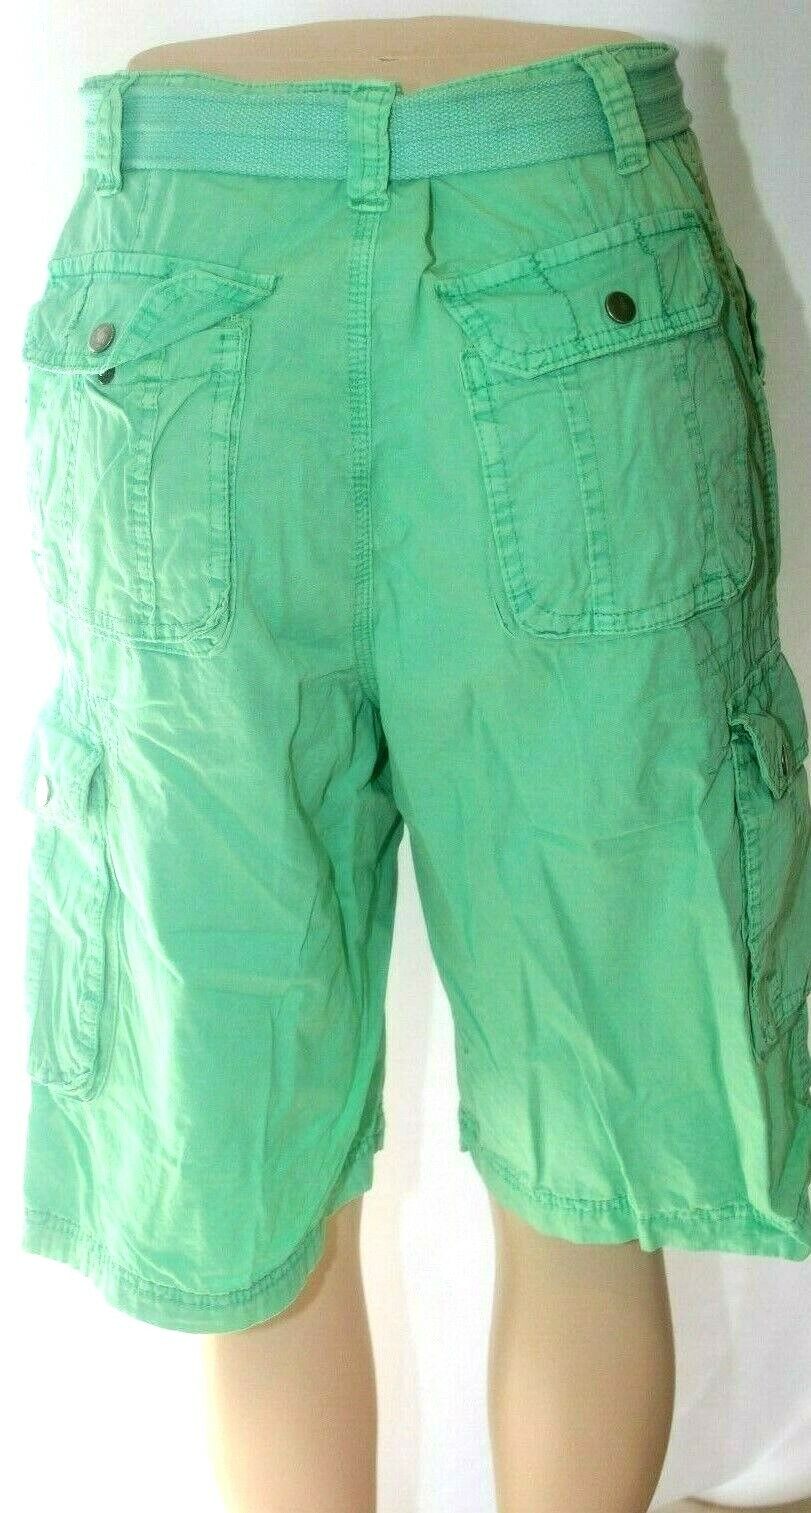 *NWT* $50. Brooklyn Xpress Men's Mint Green  Cargo Shorts & Belt Size W32